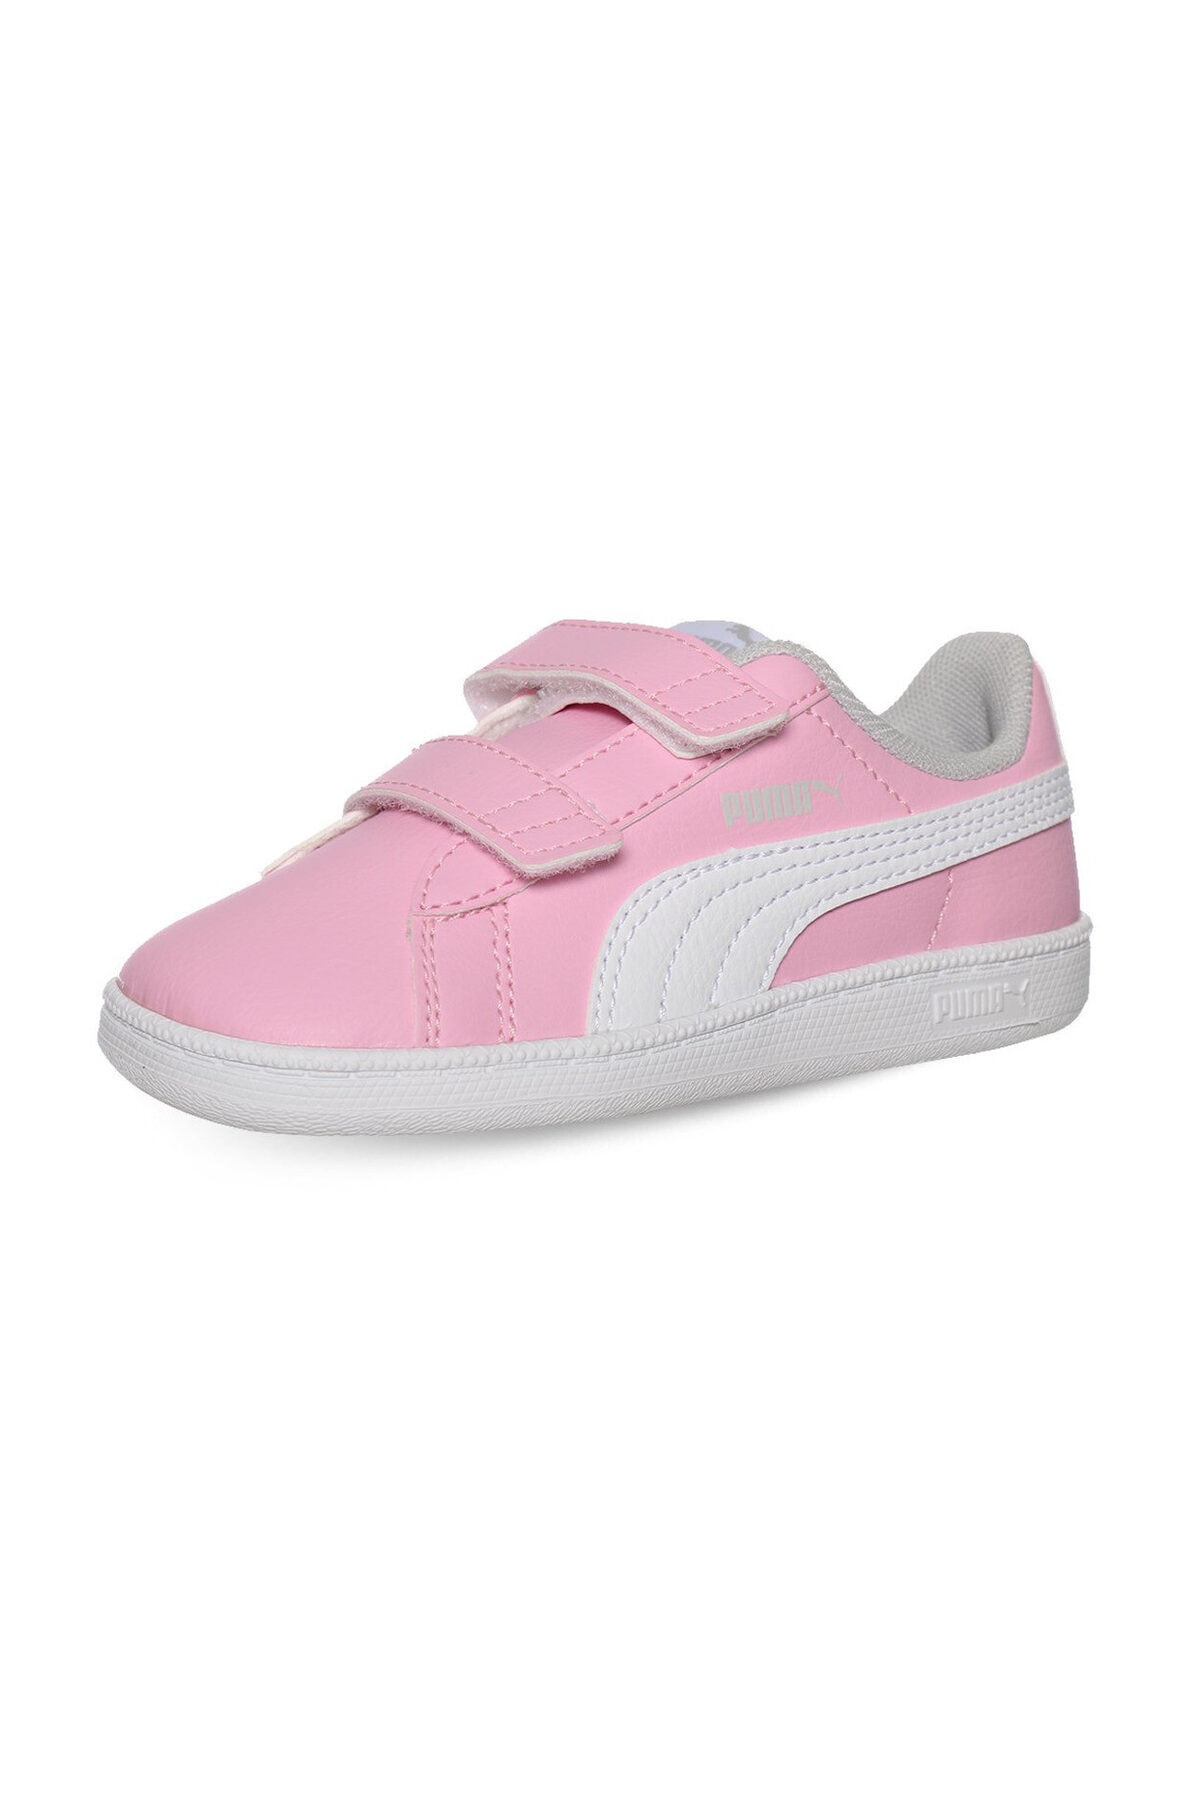 Puma Unisex Sneaker - PUMA UP V Inf Pale Pink-Puma White-Gray - 37360313 ZN9929